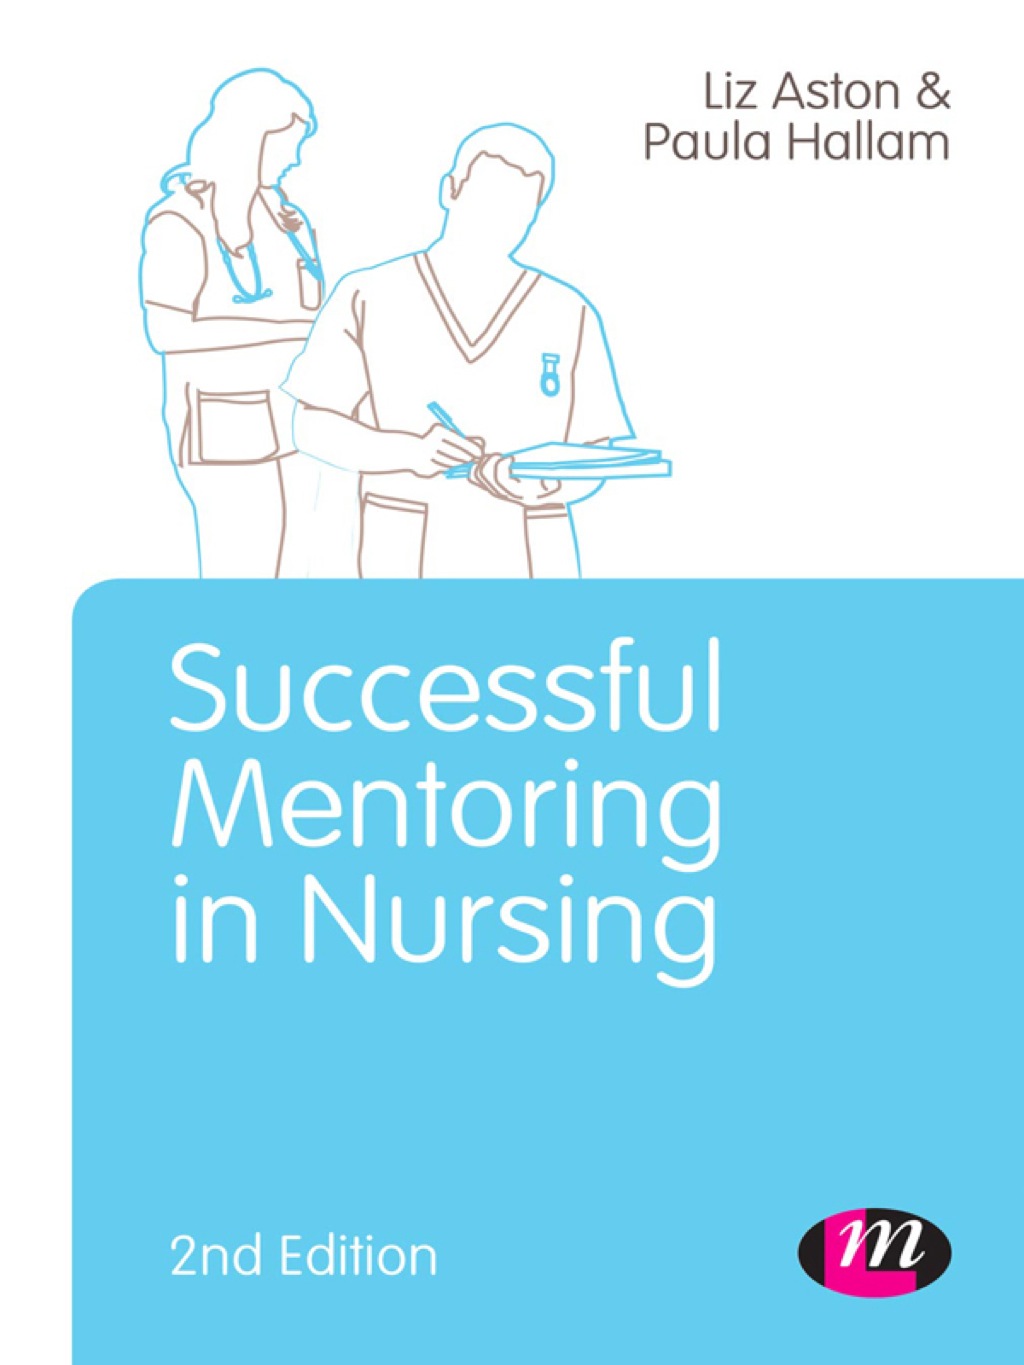 Successful Mentoring in Nursing - 2nd Edition (eBook)